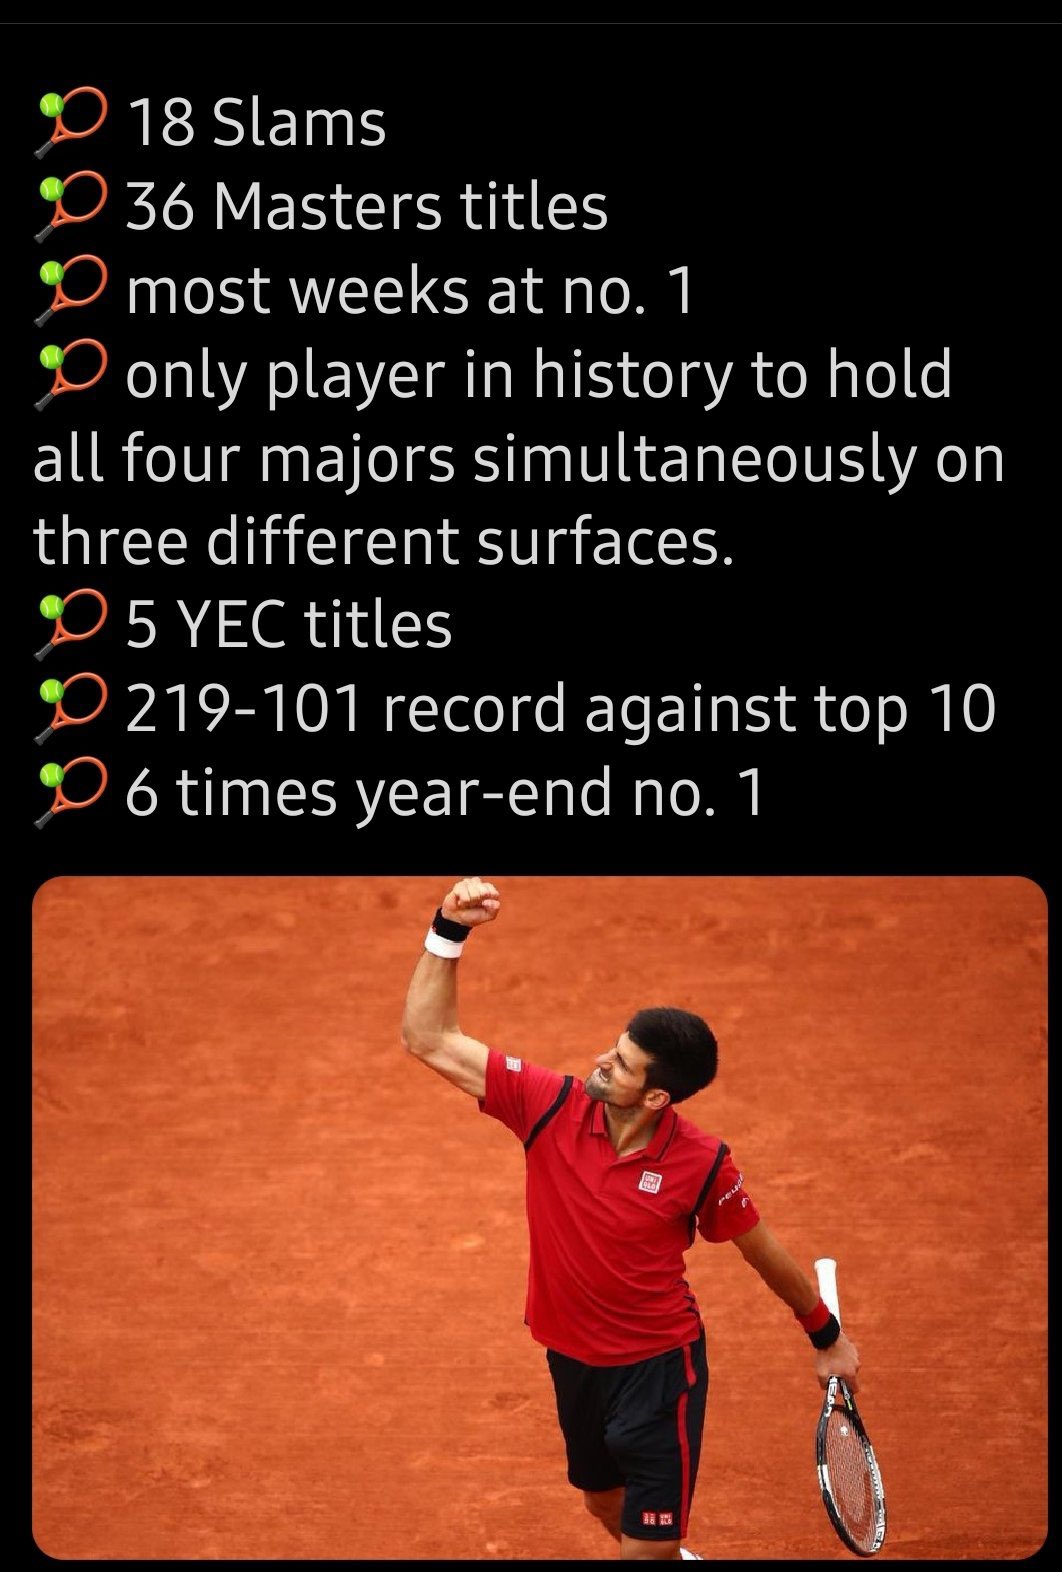  Happy Birthday Novak Djokovic  please win RG 2021 